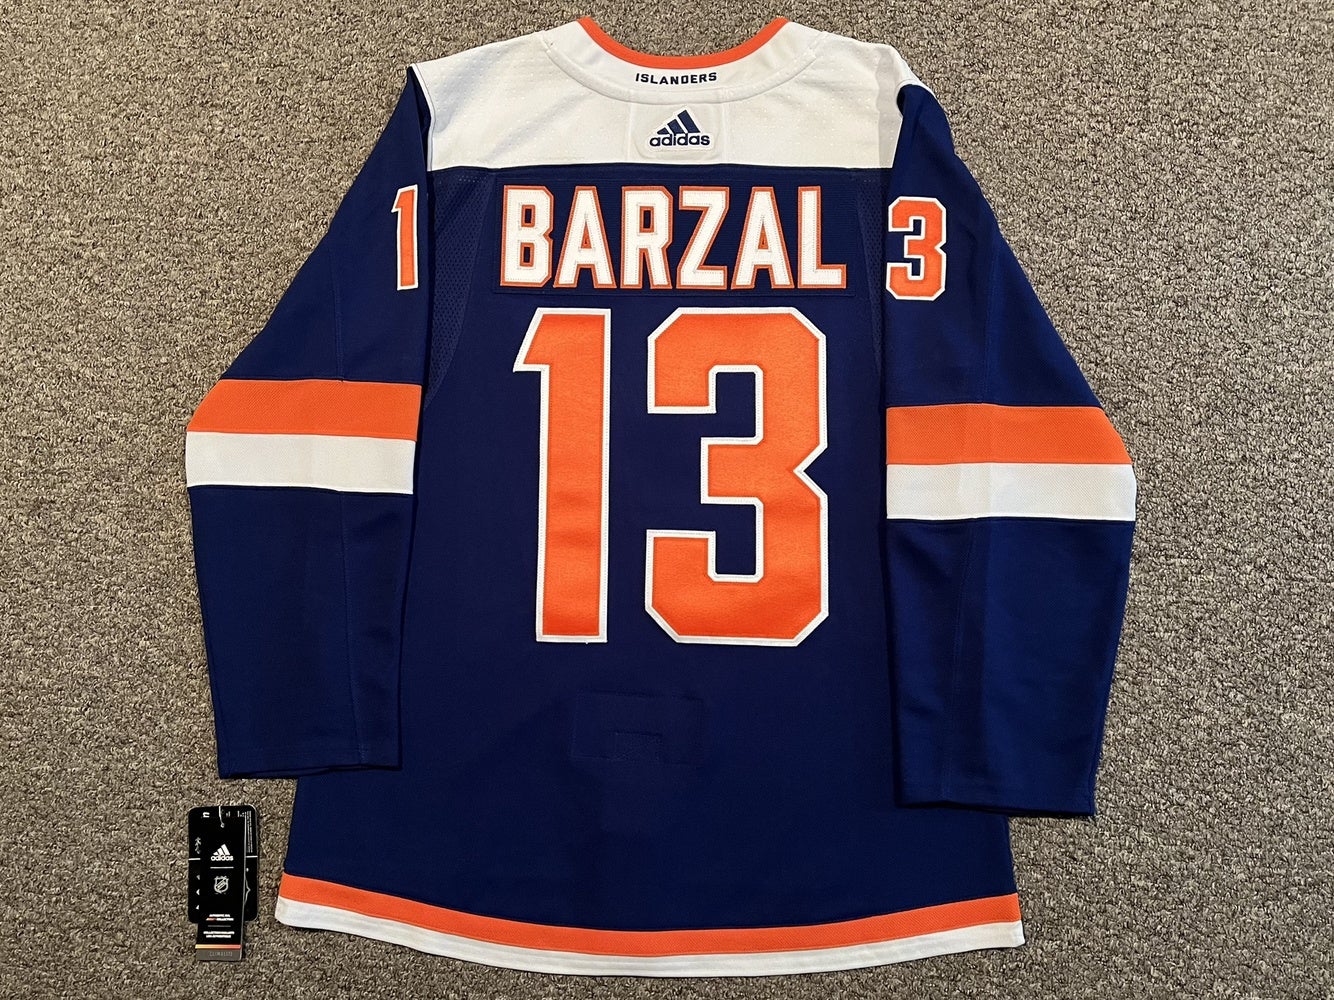 Matthew Barzal New York Islanders Authentic Adidas Blue Jersey